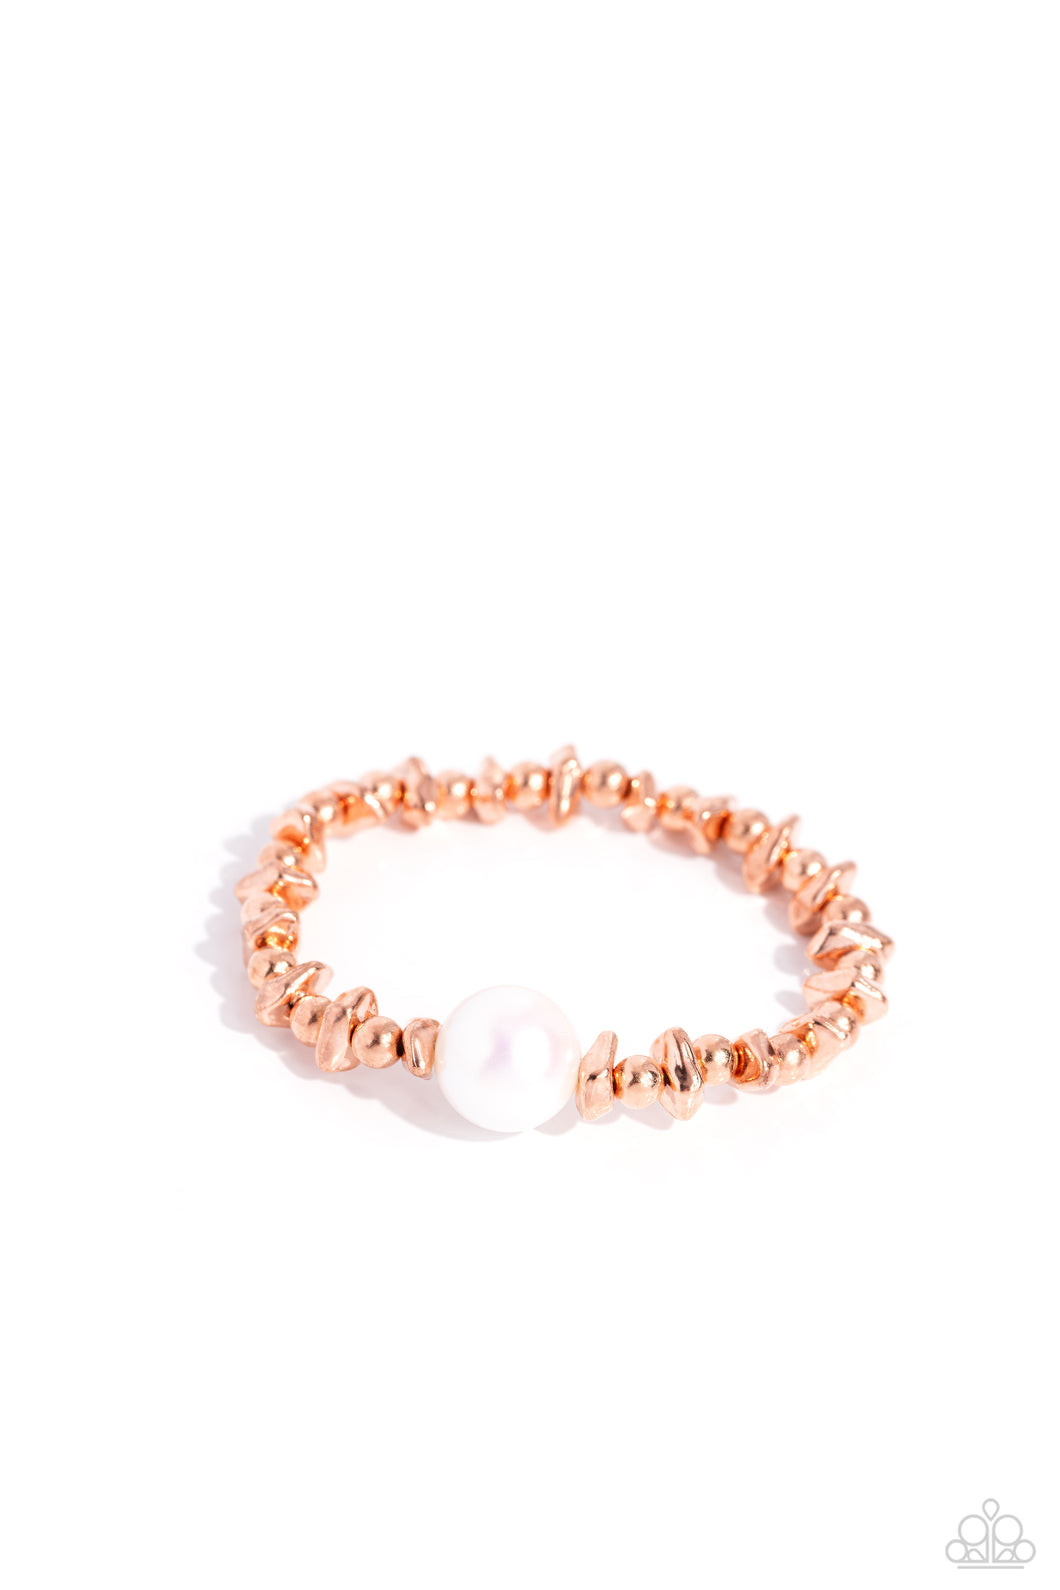 Chiseled Class - Copper (Shiny/Penny) Pearl Bracelet